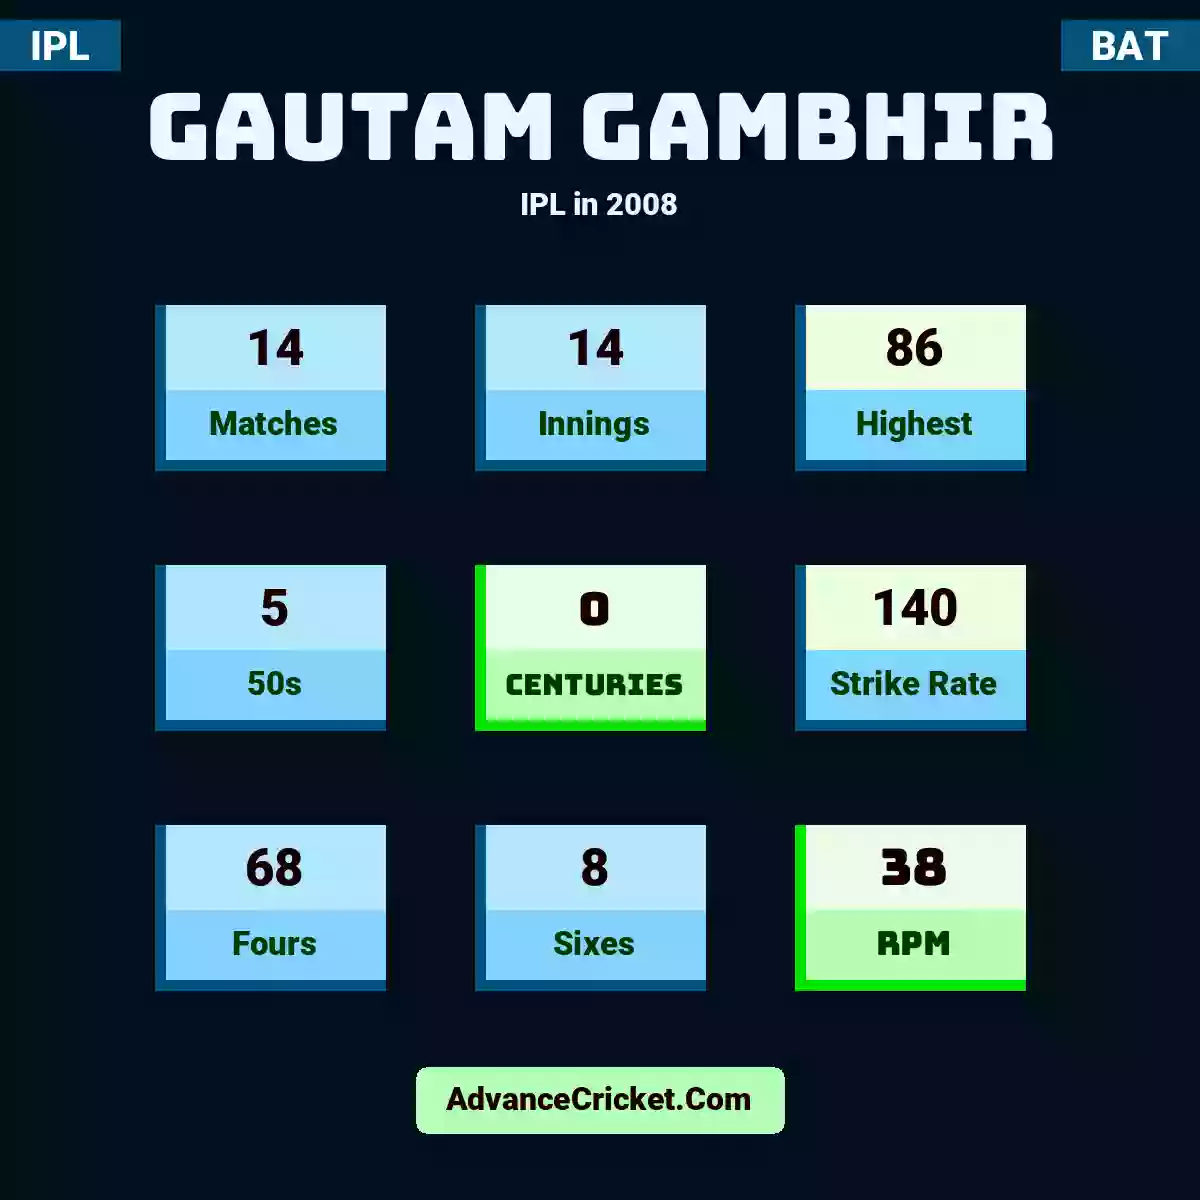 Gautam Gambhir IPL  in 2008, Gautam Gambhir played 14 matches, scored 86 runs as highest, 5 half-centuries, and 0 centuries, with a strike rate of 140. G.Gambhir hit 68 fours and 8 sixes, with an RPM of 38.